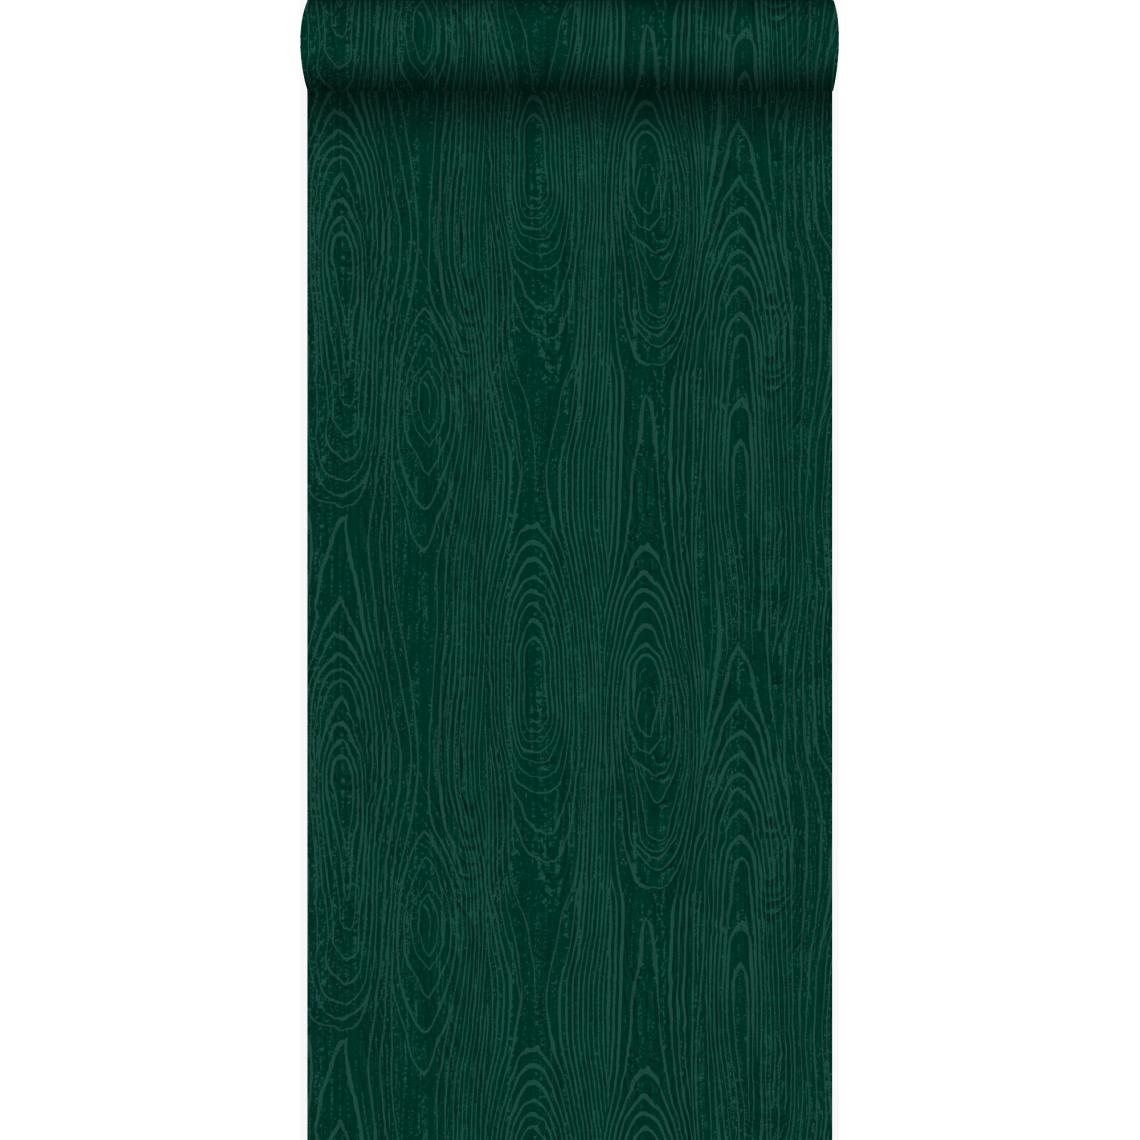 Origin - Origin papier peint imitation bois vert émeraude - 347557 - 53 cm x 10.05 m - Papier peint